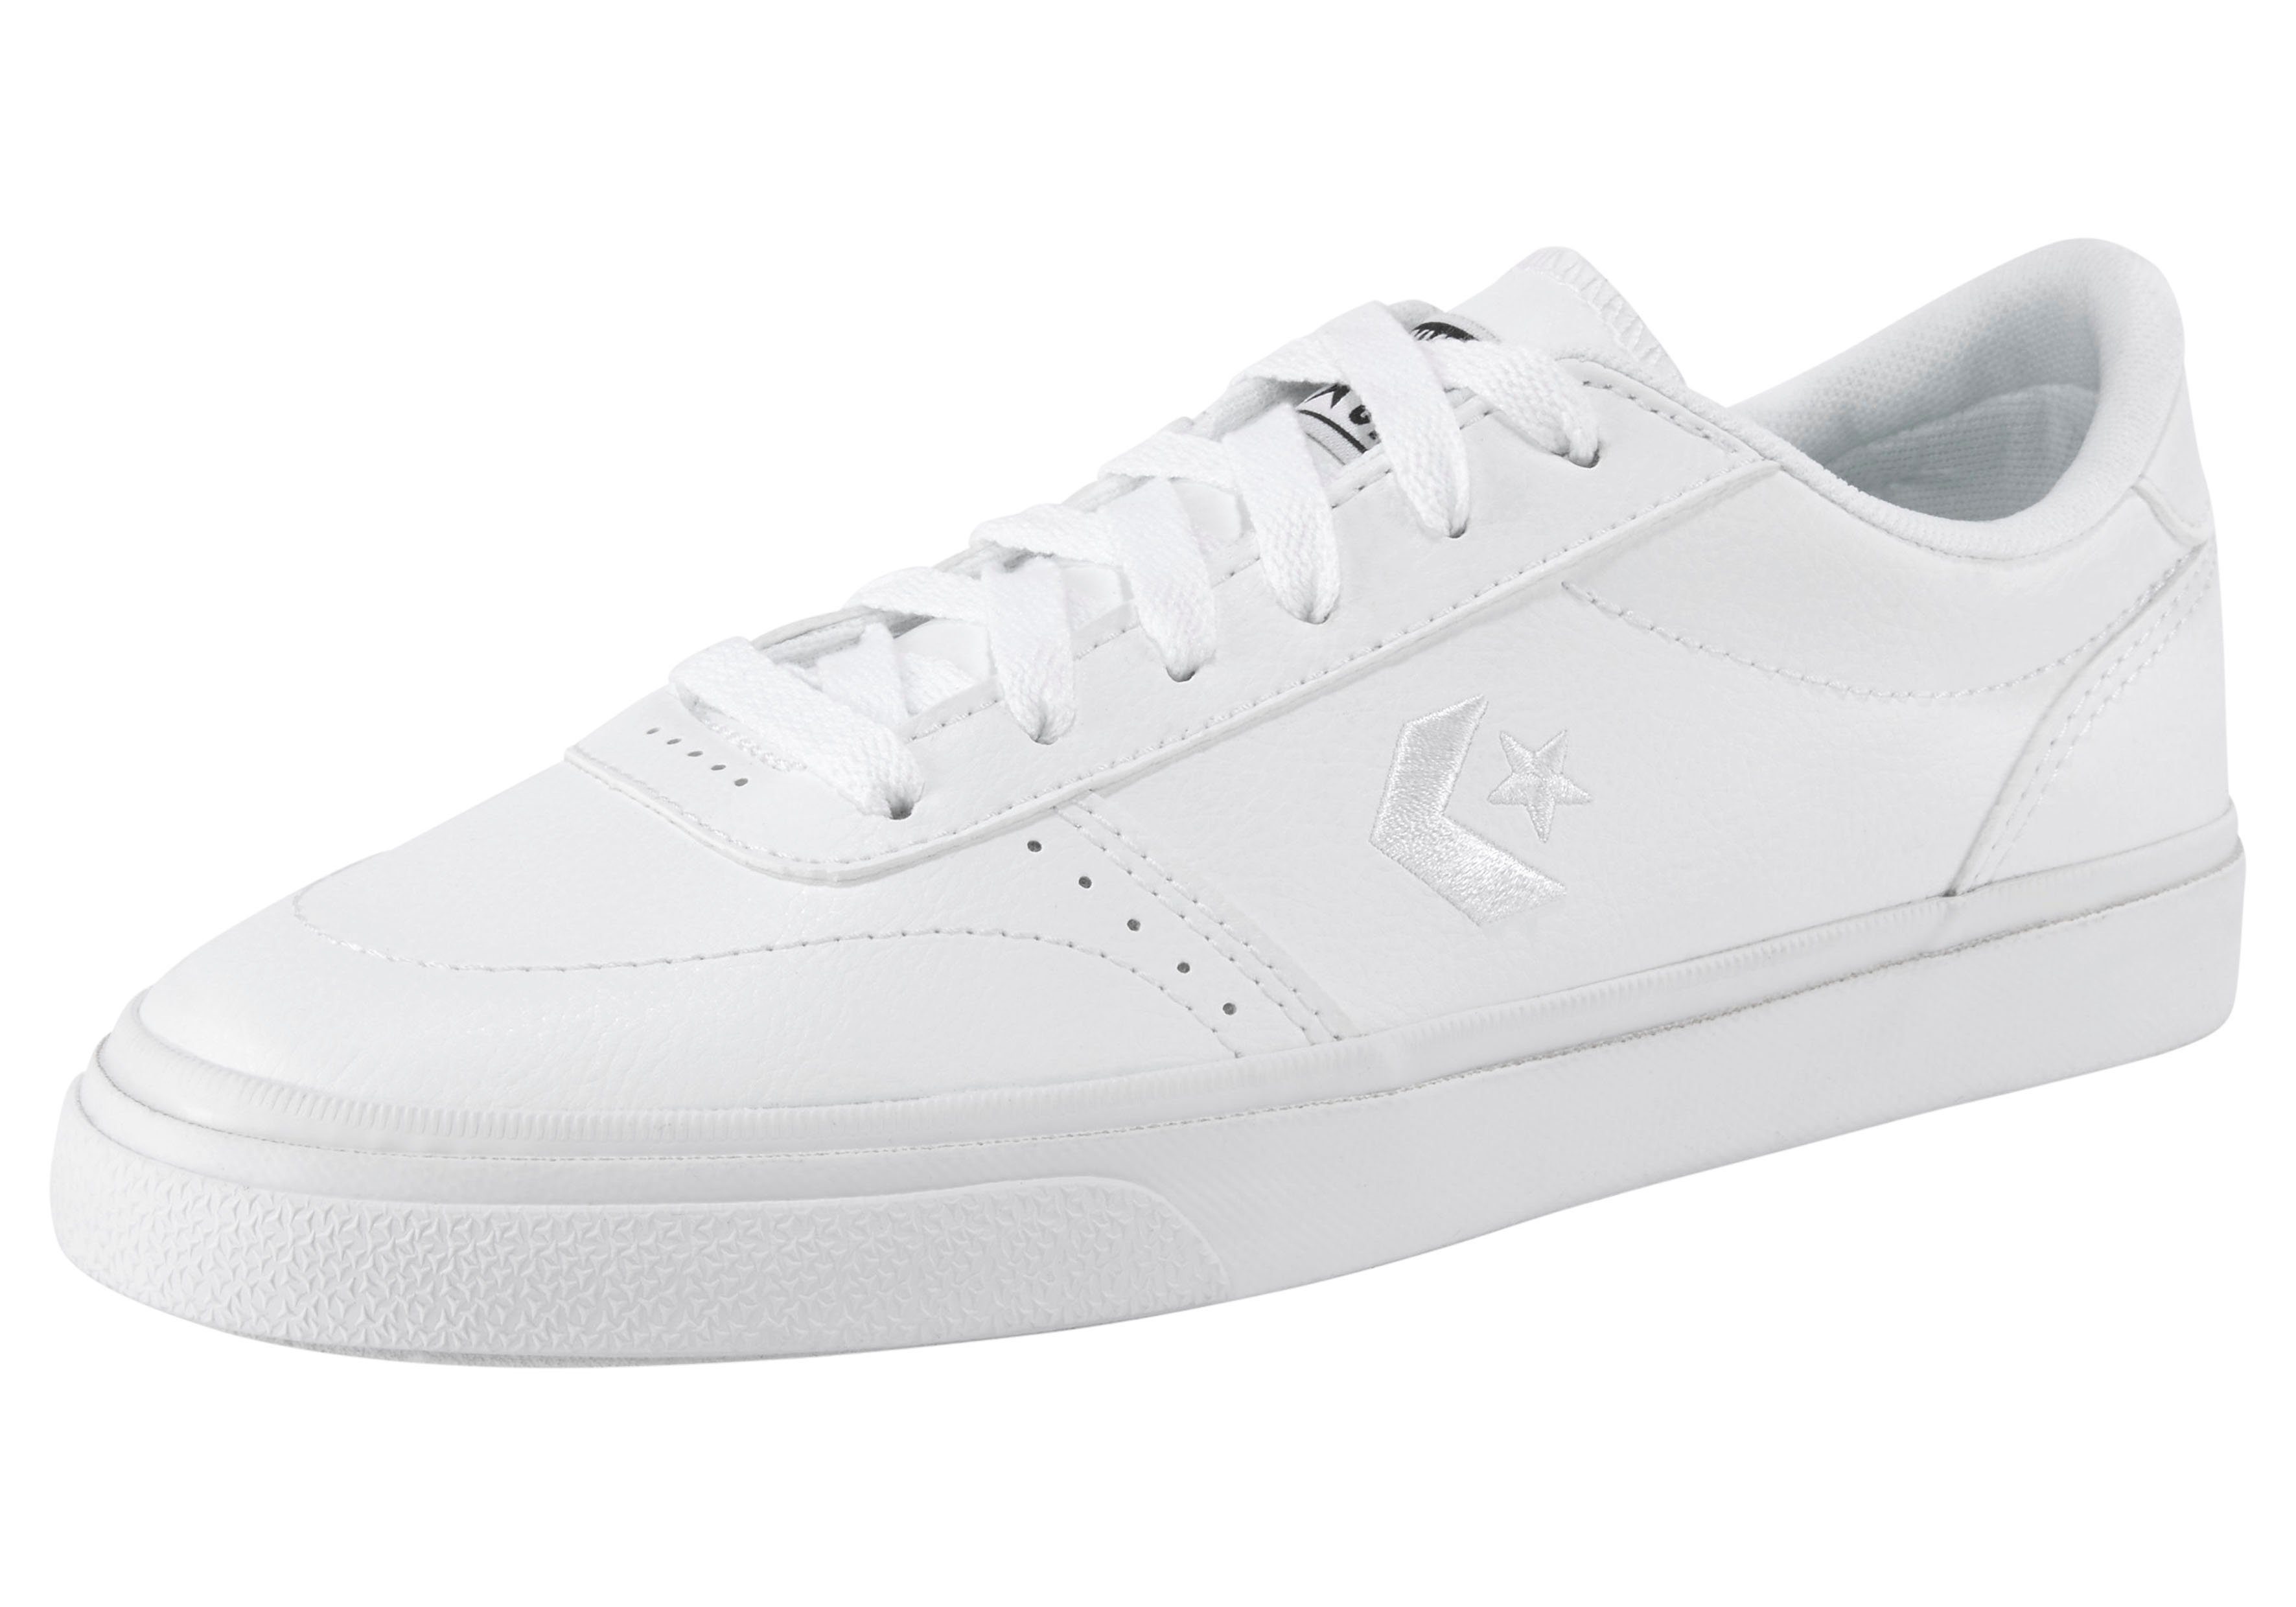 Converse »CONVERSE BOULEVARD« Sneaker kaufen | OTTO